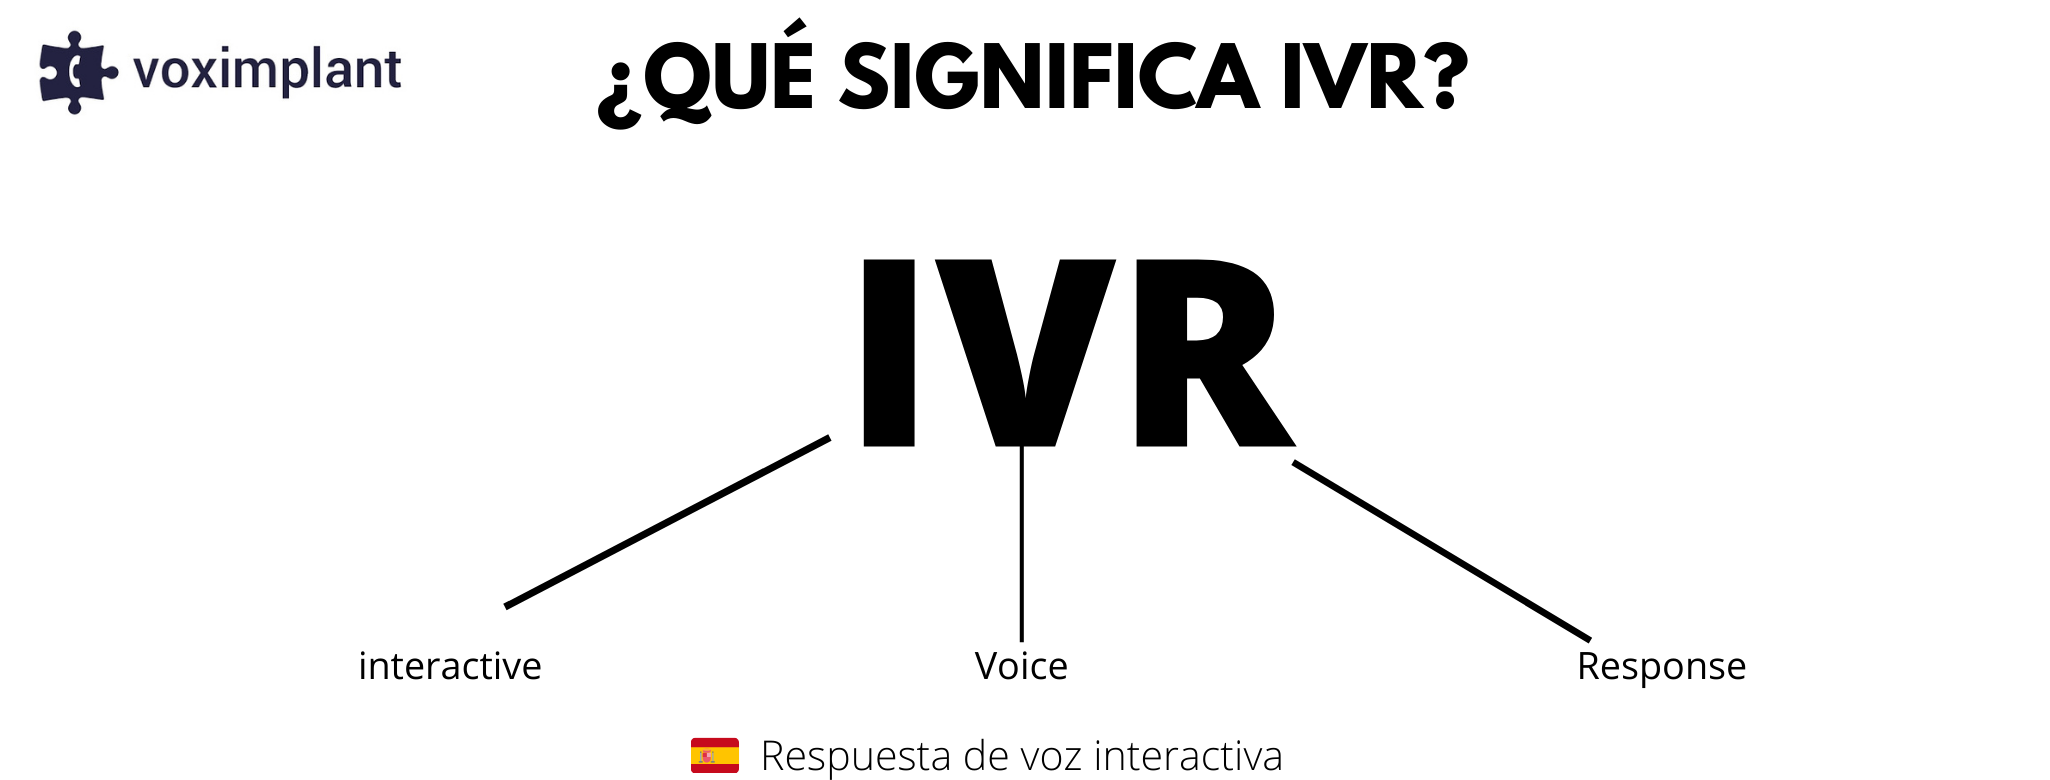 Que significa IVR